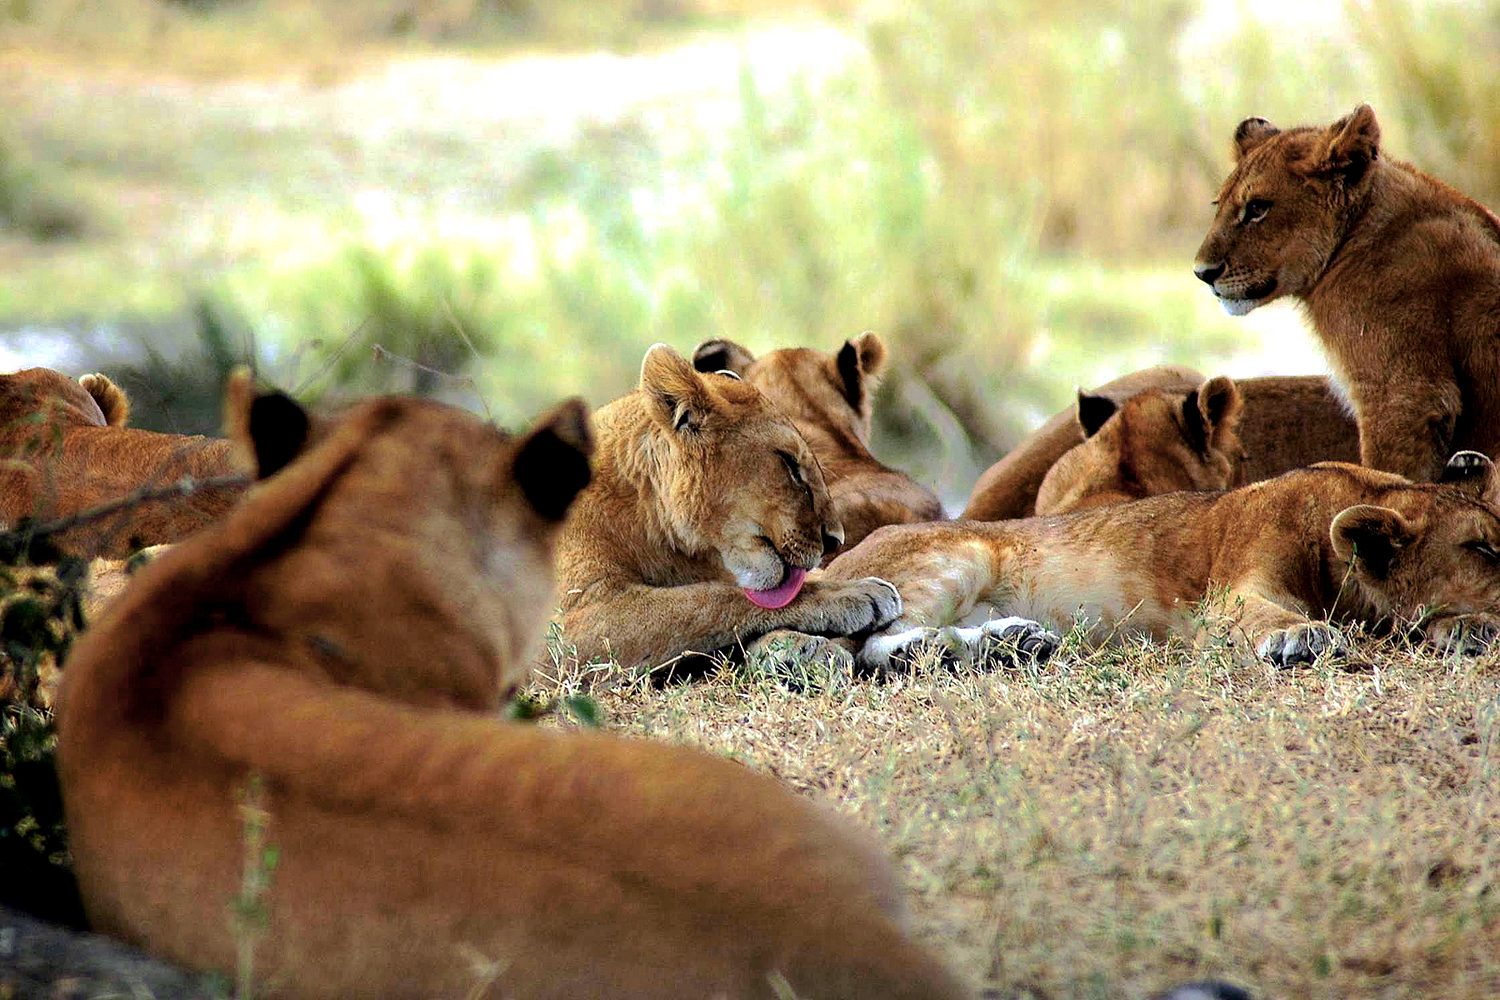 Eclipse 2004 - Serengeti - A26 - Lion Pride